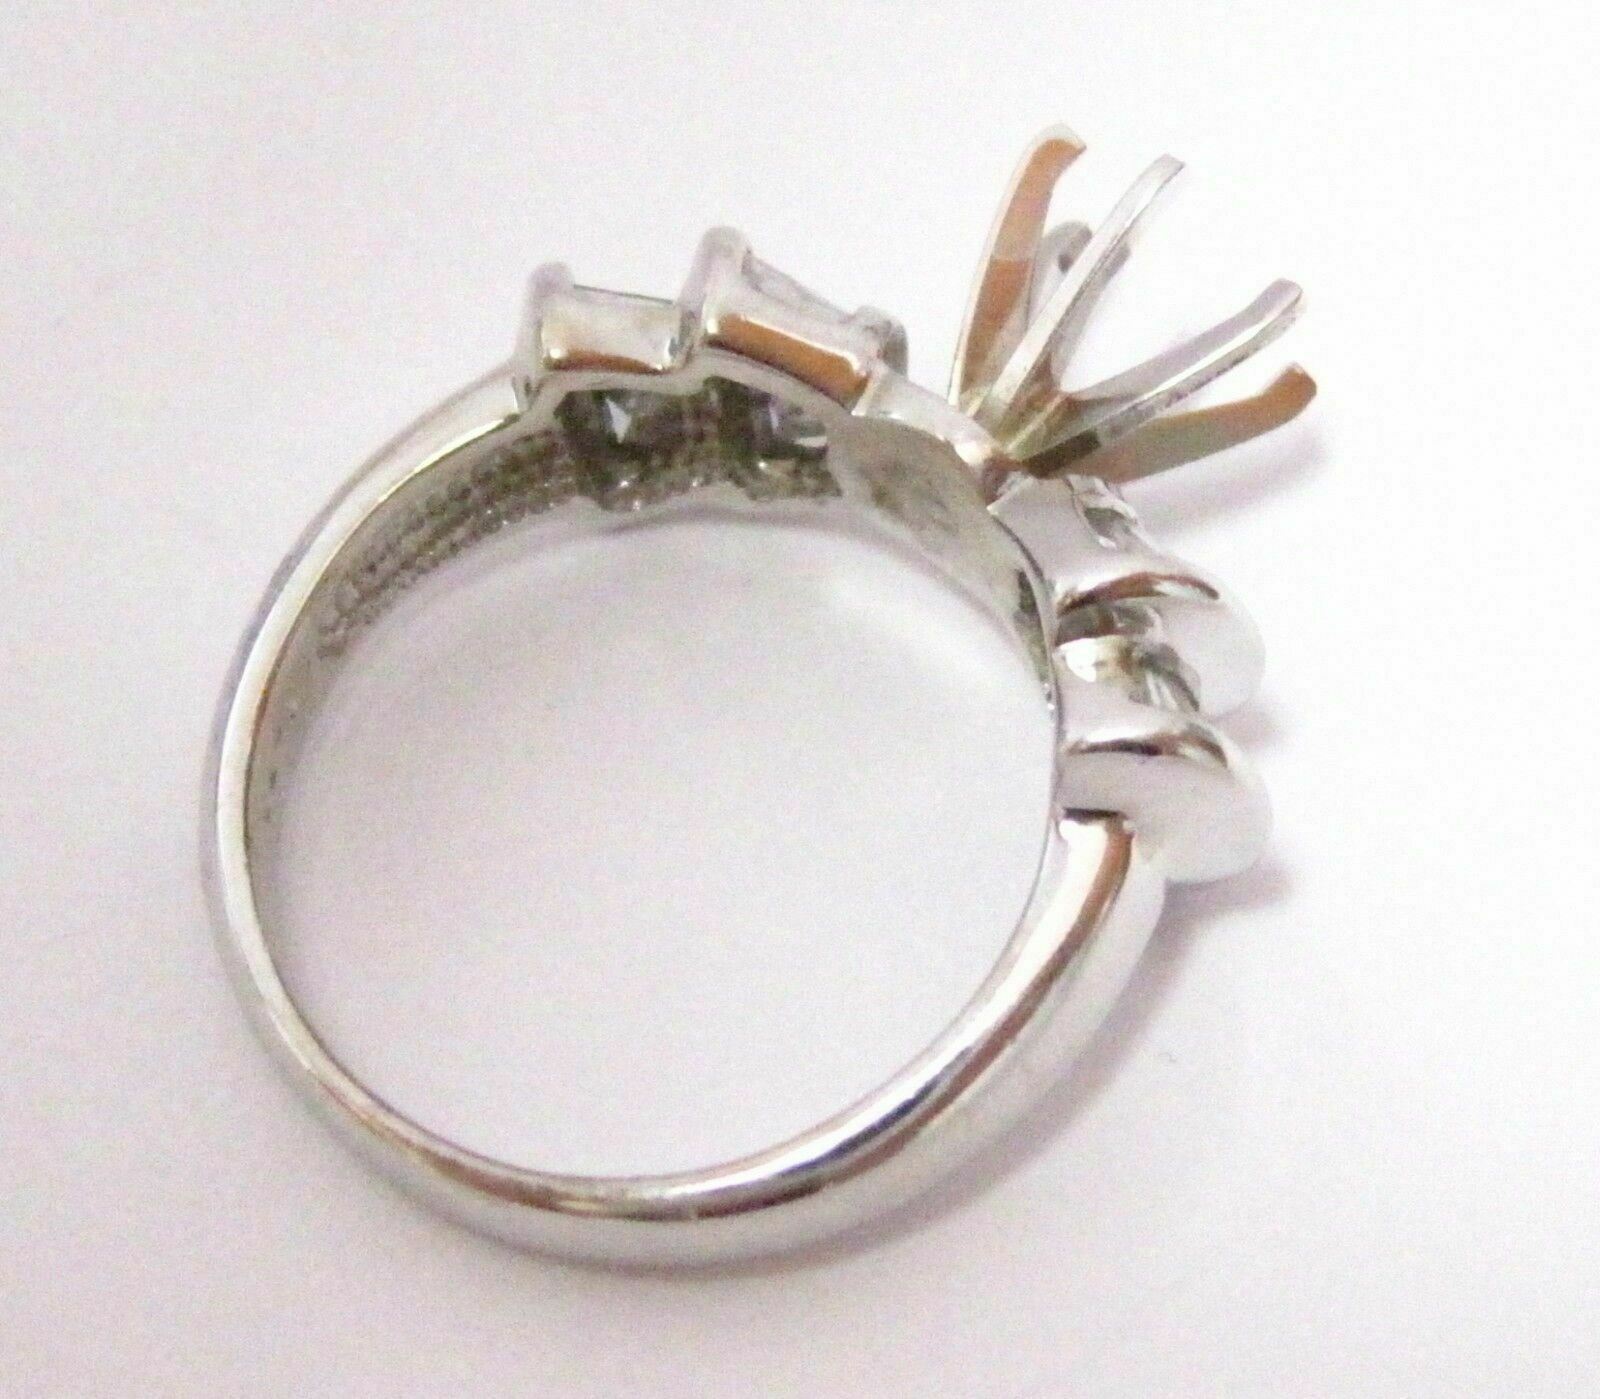 0.73 TCW 6 Prongs Semi-Mounting Round Diamond Bridal RIng 14k White Gold